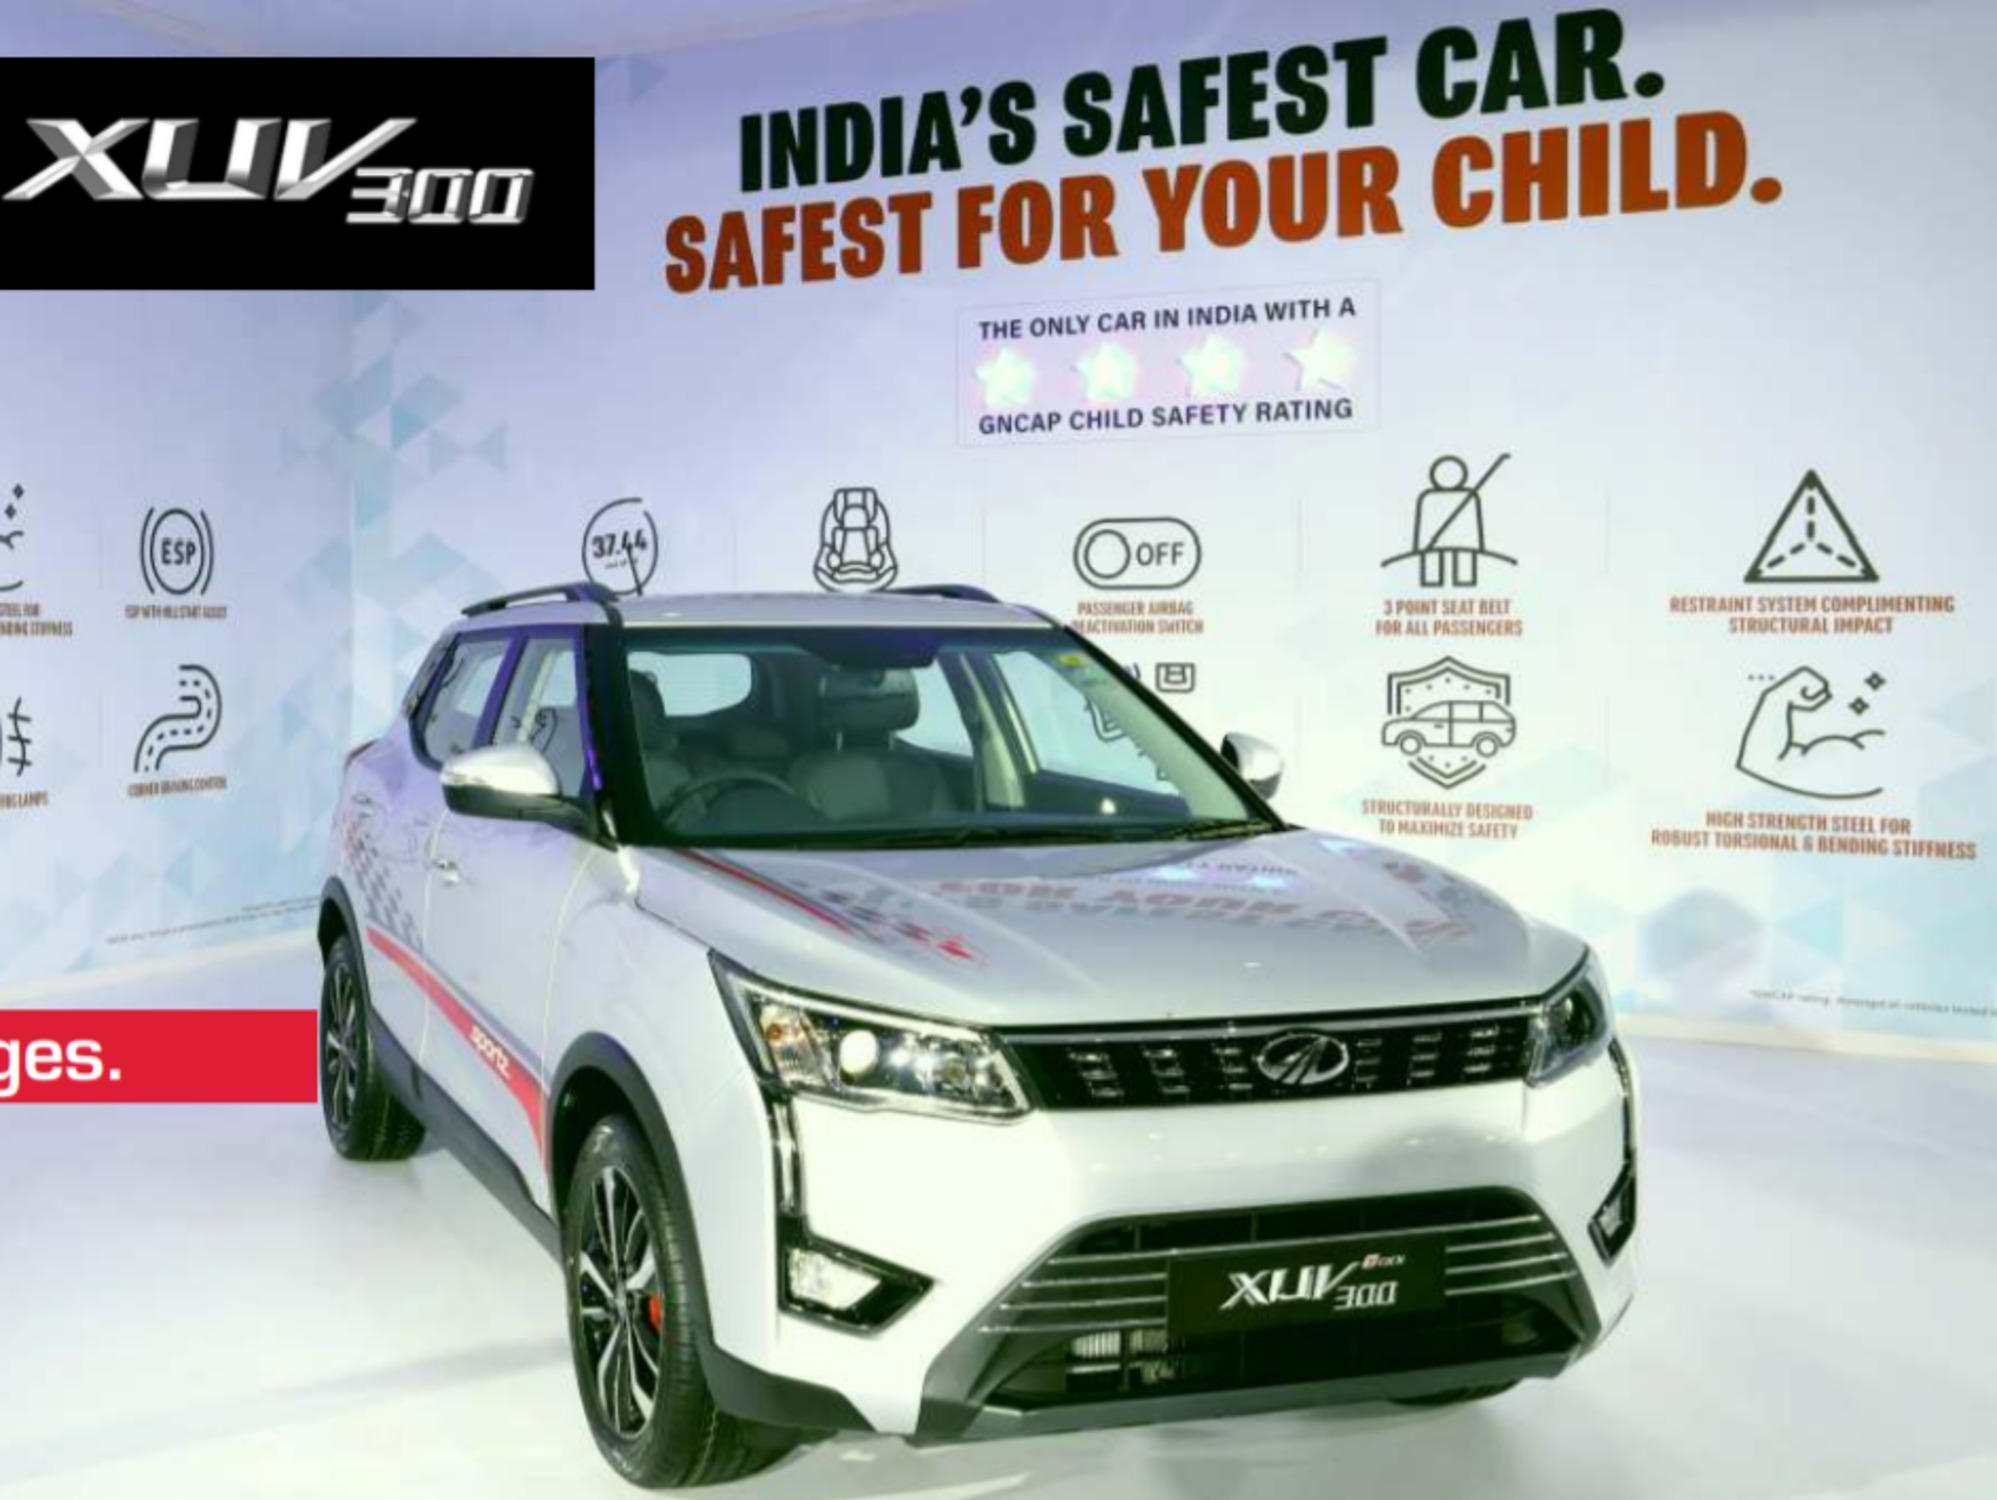 Mahindra Safest Car india xuv 300